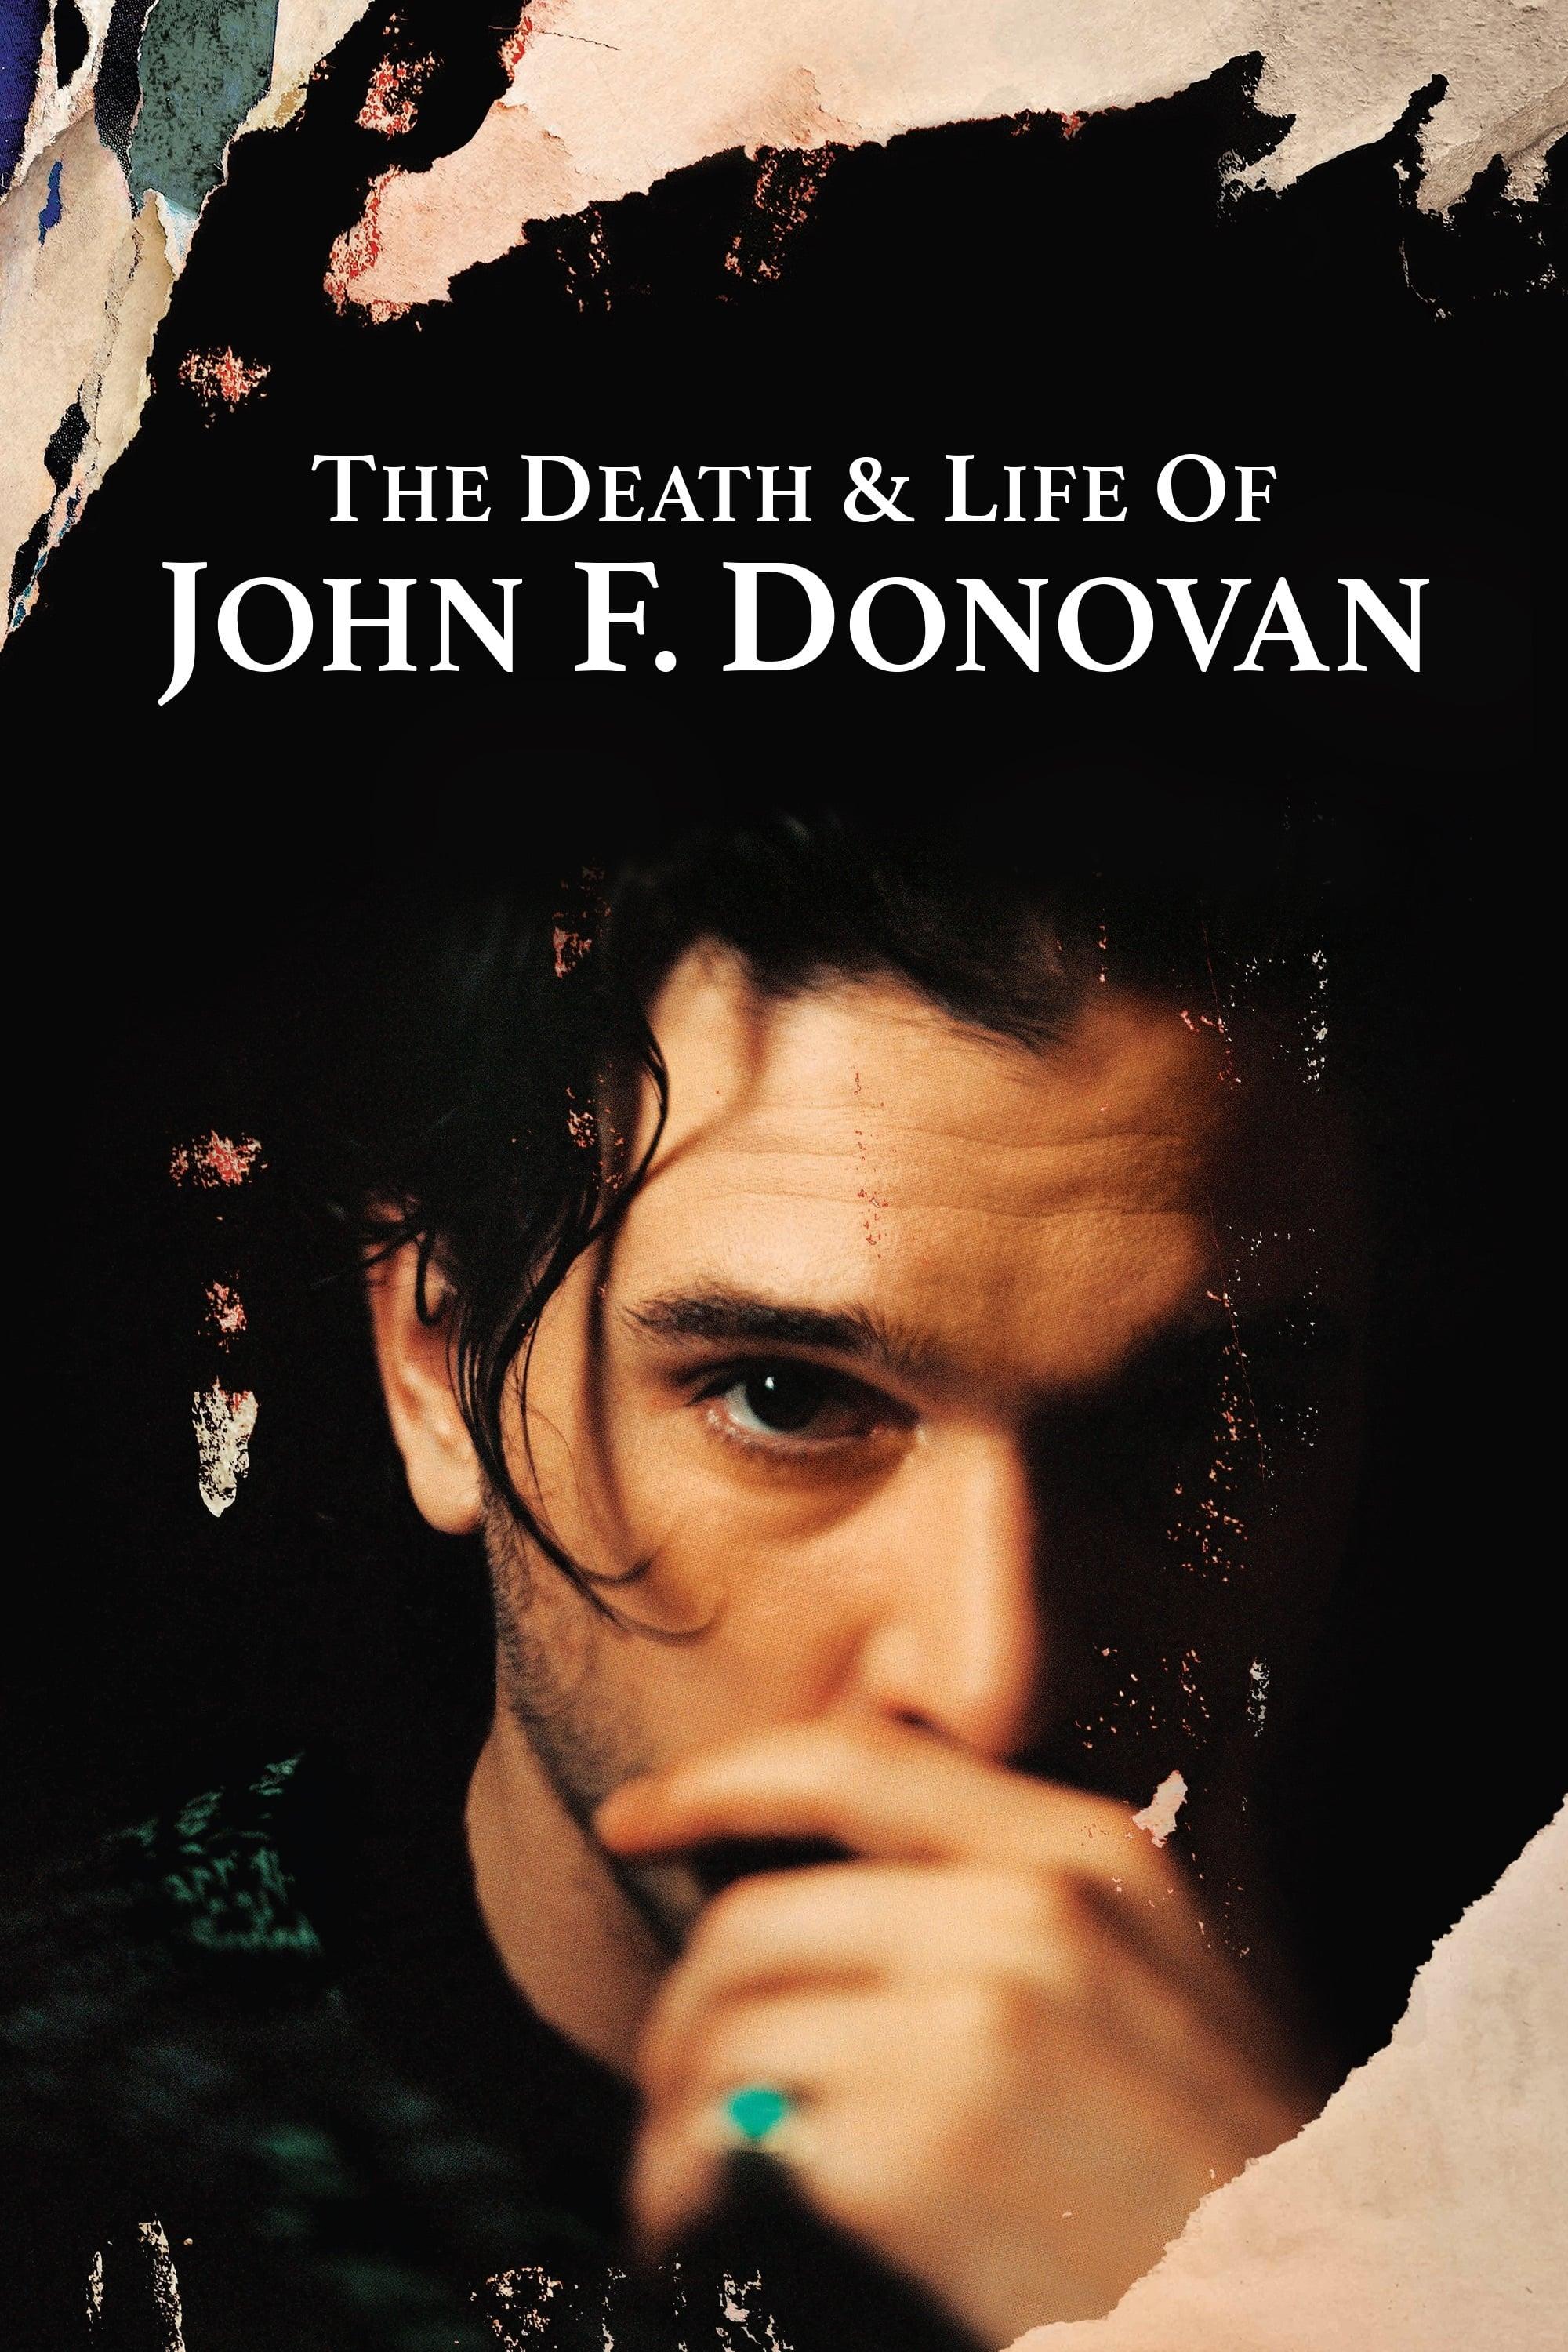 The Death & Life of John F. Donovan poster